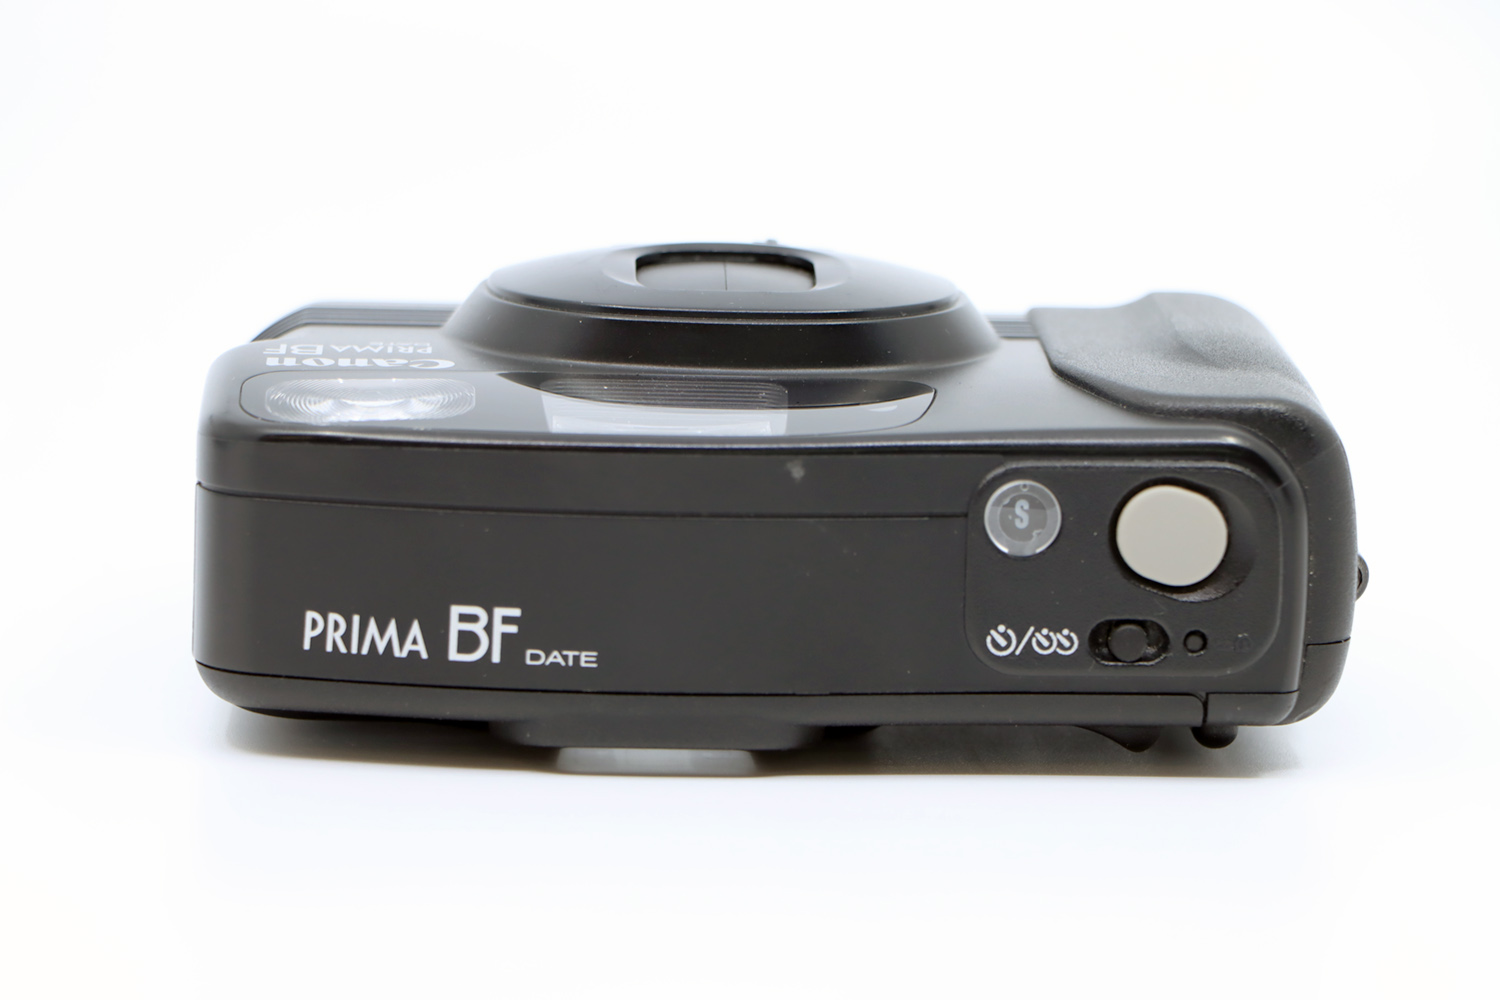 Canon Prima BF Date | IMG_5244.JPG